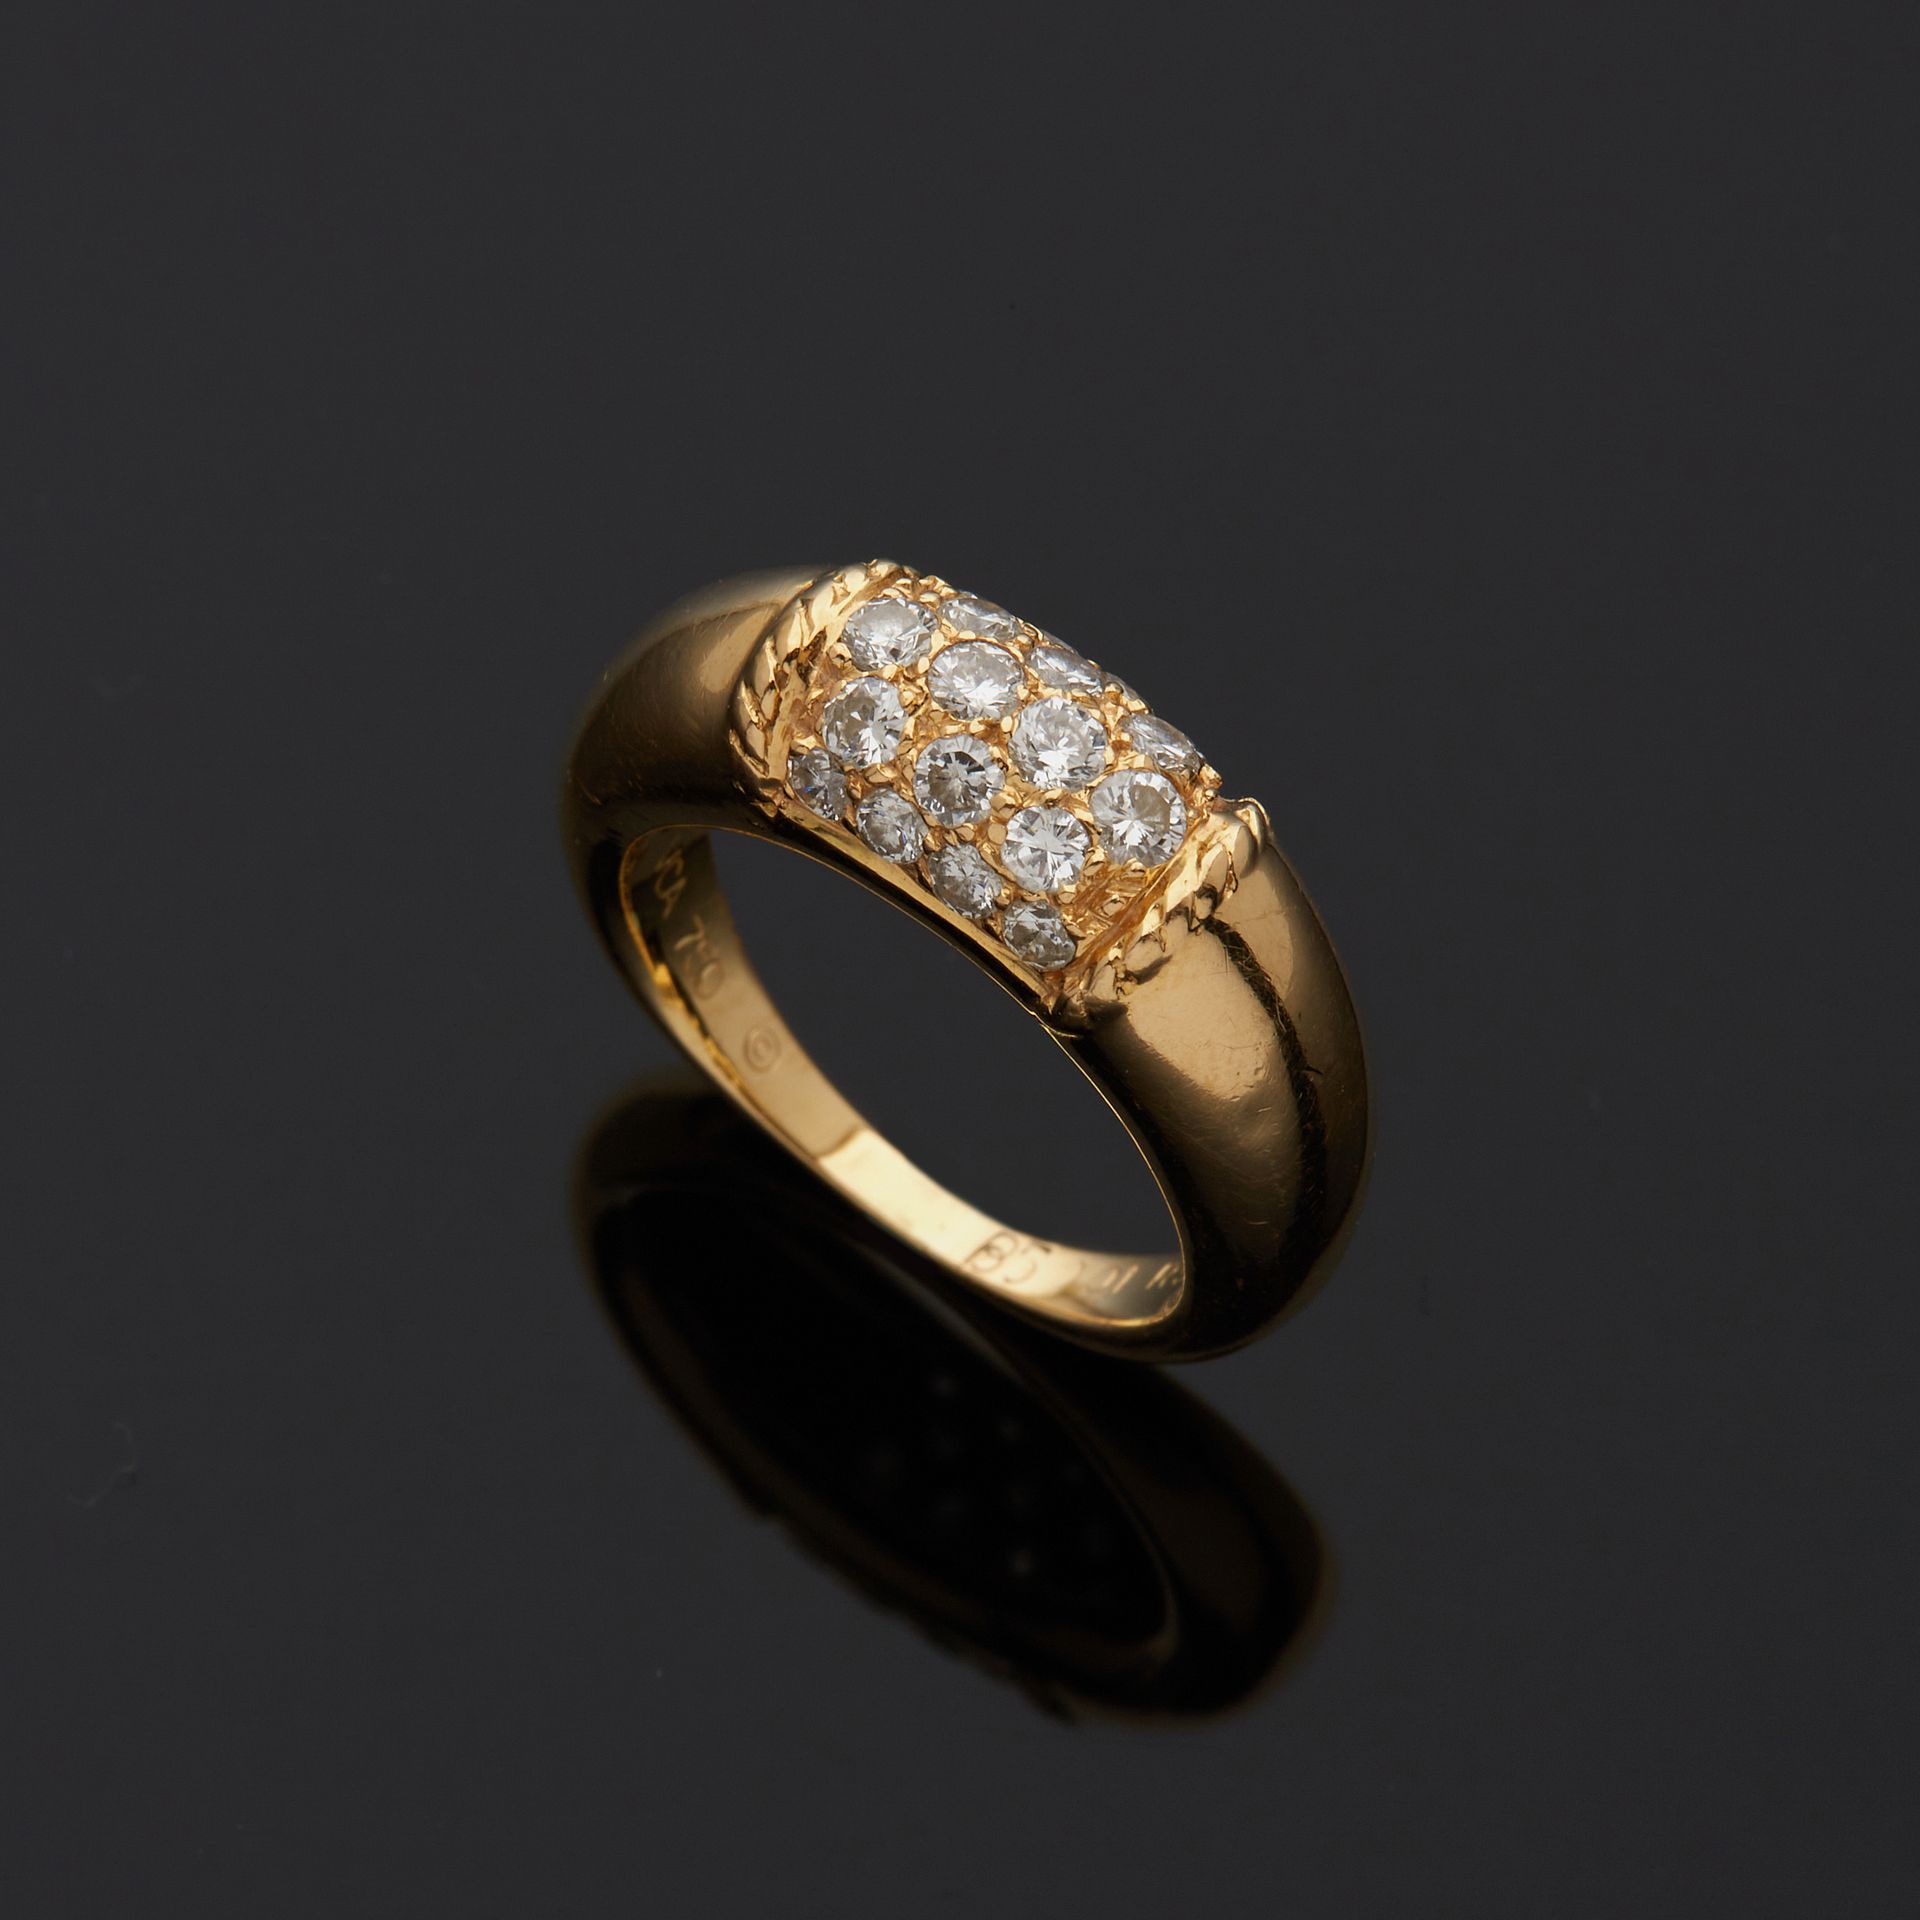 Null 梵克雅宝。
750毫米黄金菲律宾戒指，在两条绳索图案之间铺设明亮式切割钻石。
签有VCA和编号。
TDD:49
总重量：6.3克